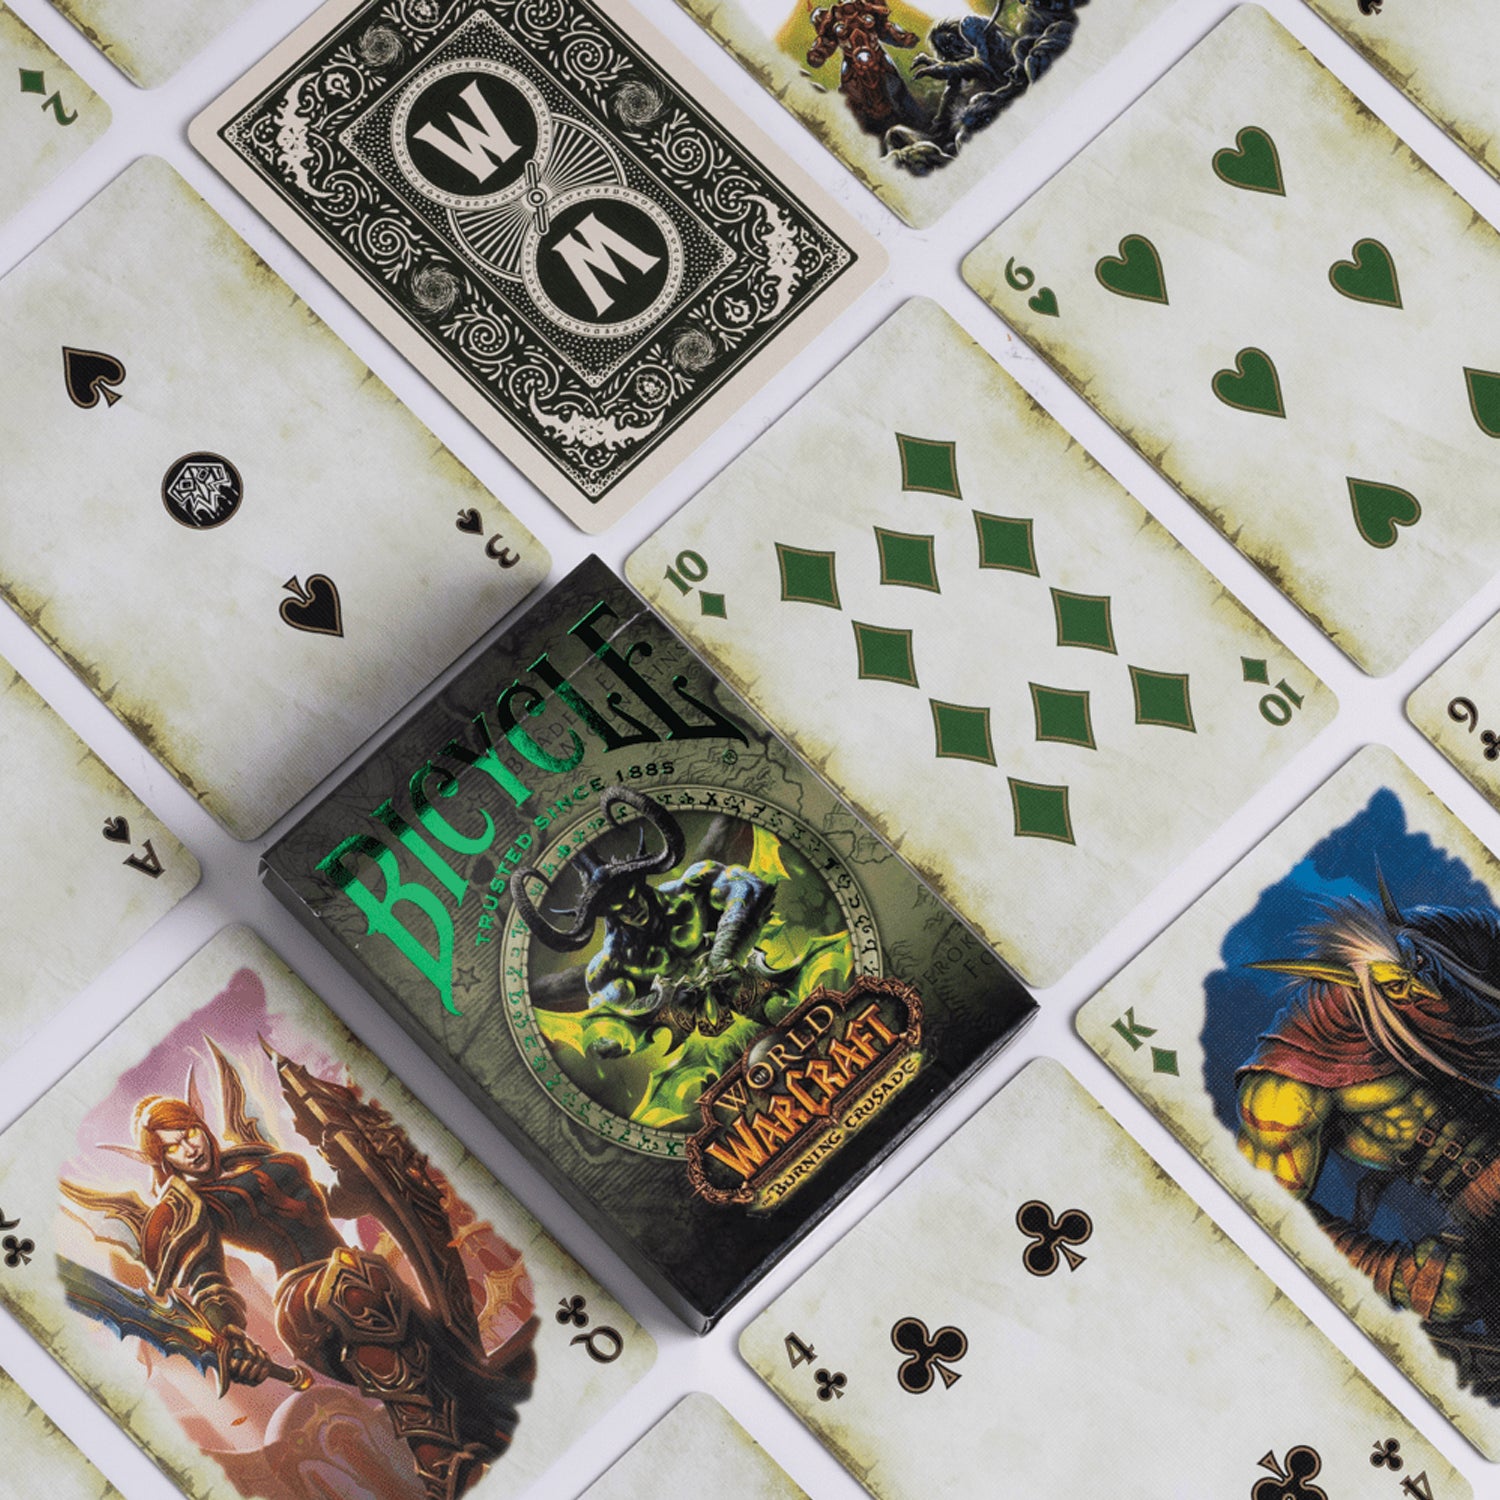 World of Warcraft The Burning Crusade Bicycle Card Deck - Cards